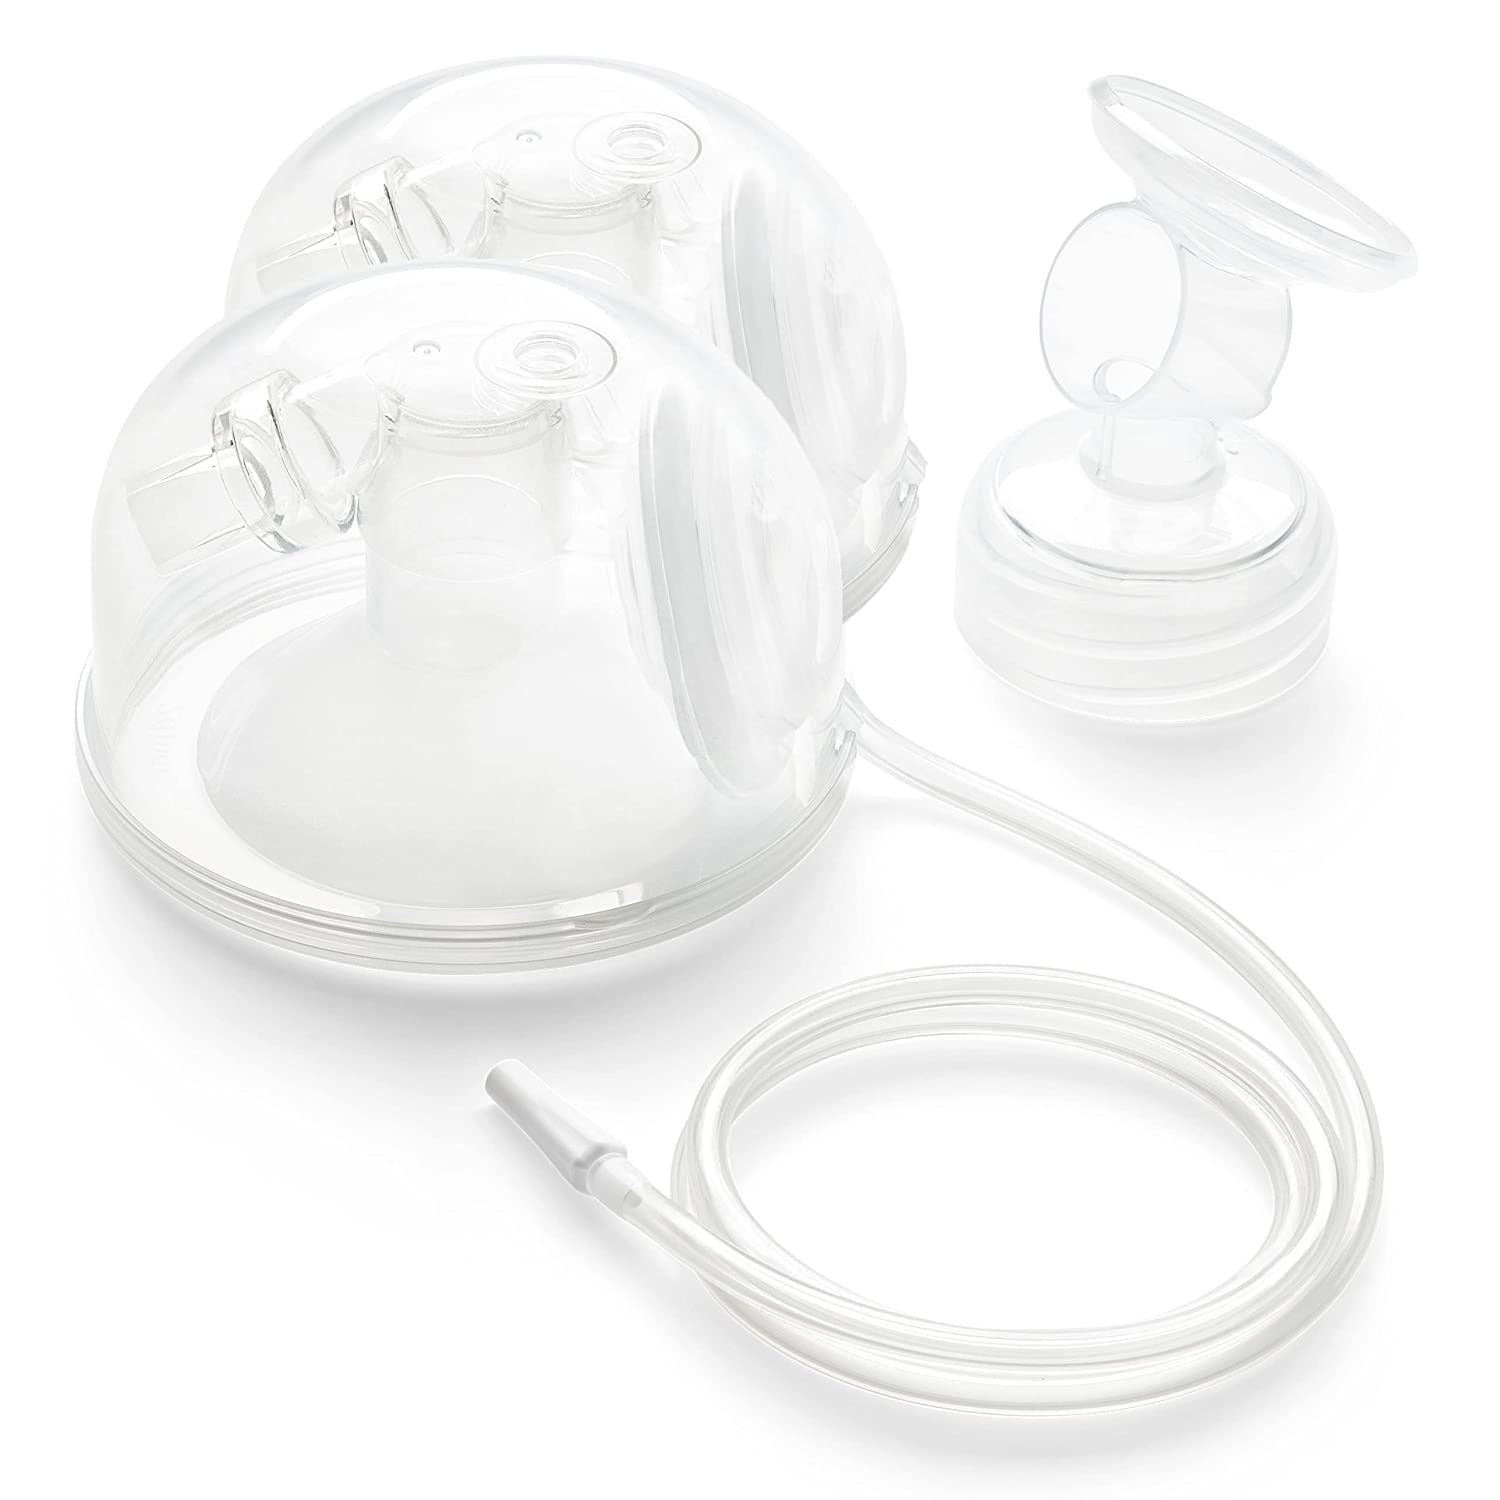 Handsfree cup - Double (Lactafly), Babies & Kids, Nursing & Feeding,  Breastfeeding & Bottle Feeding on Carousell